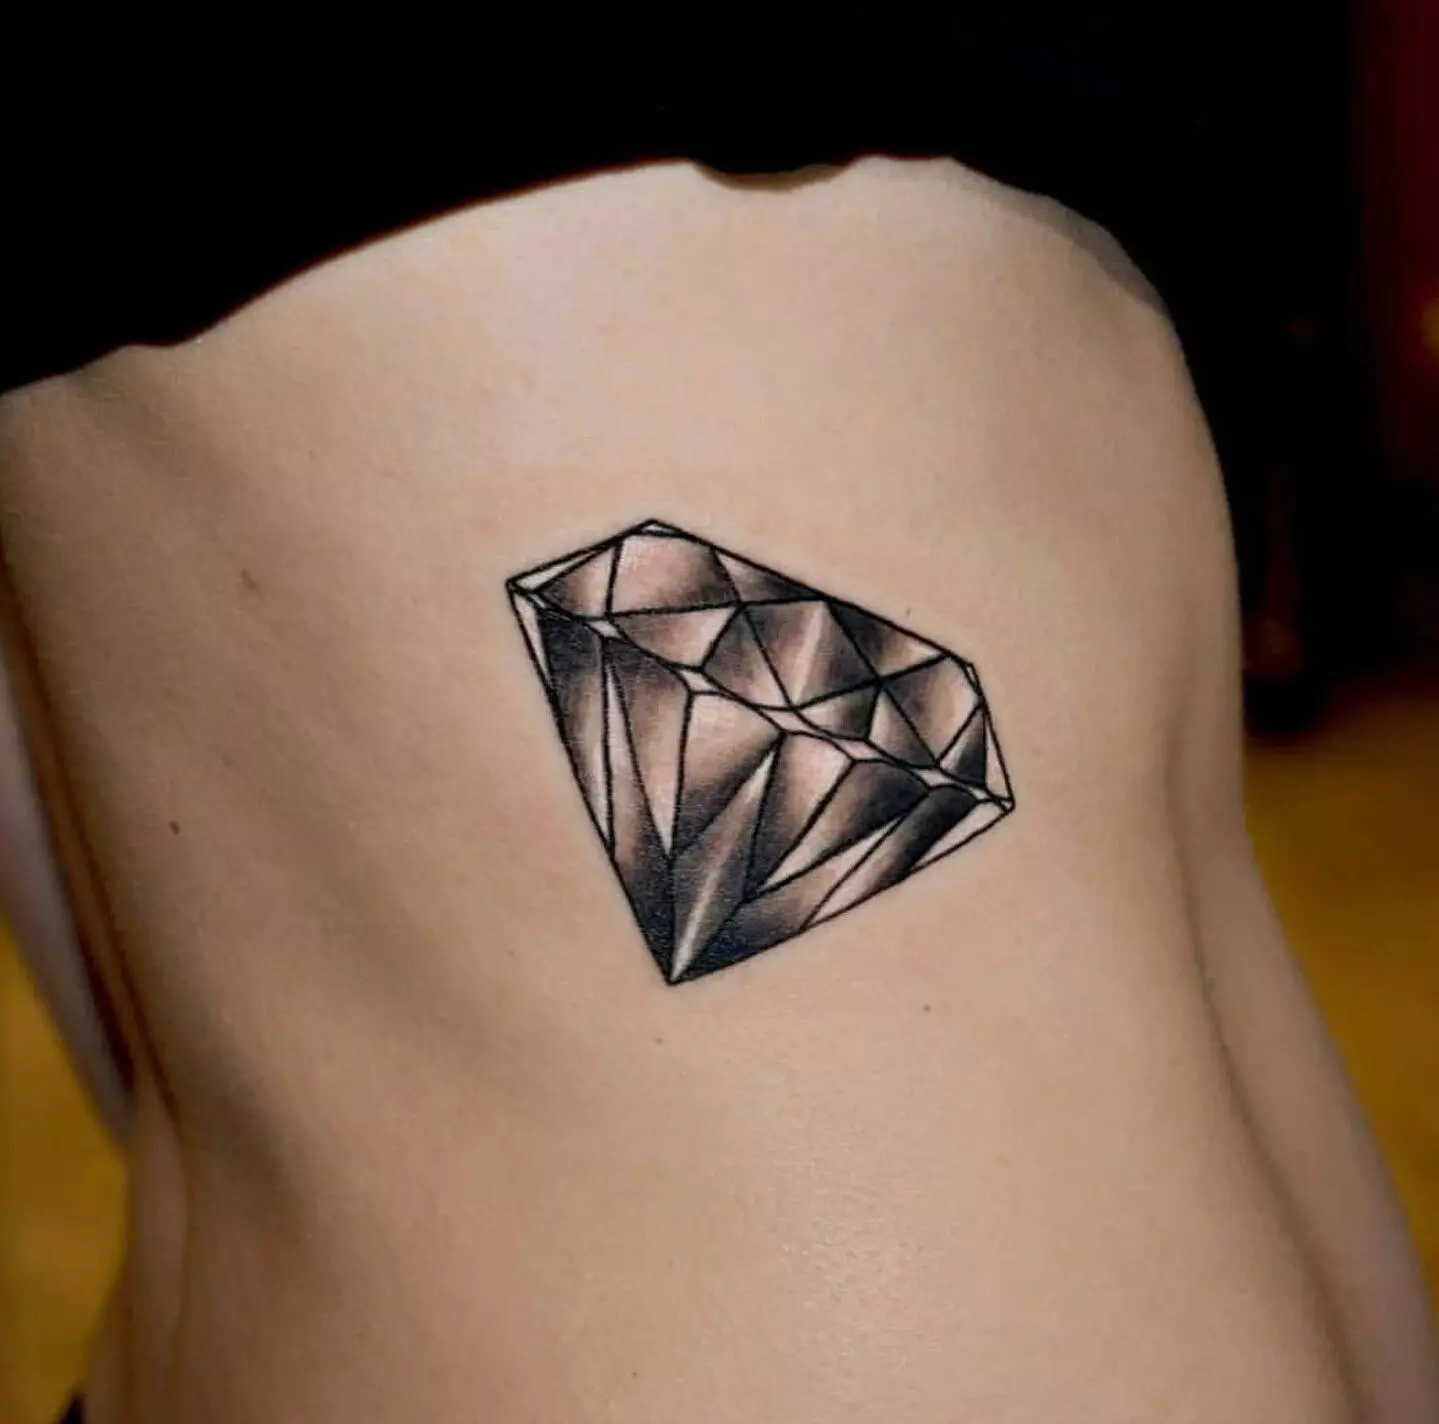 Crystal Tattoo: Sketches and Crystalline Tattoo มูลค่าแผนการที่ดีที่สุดสำหรับการใช้งาน 13764_10